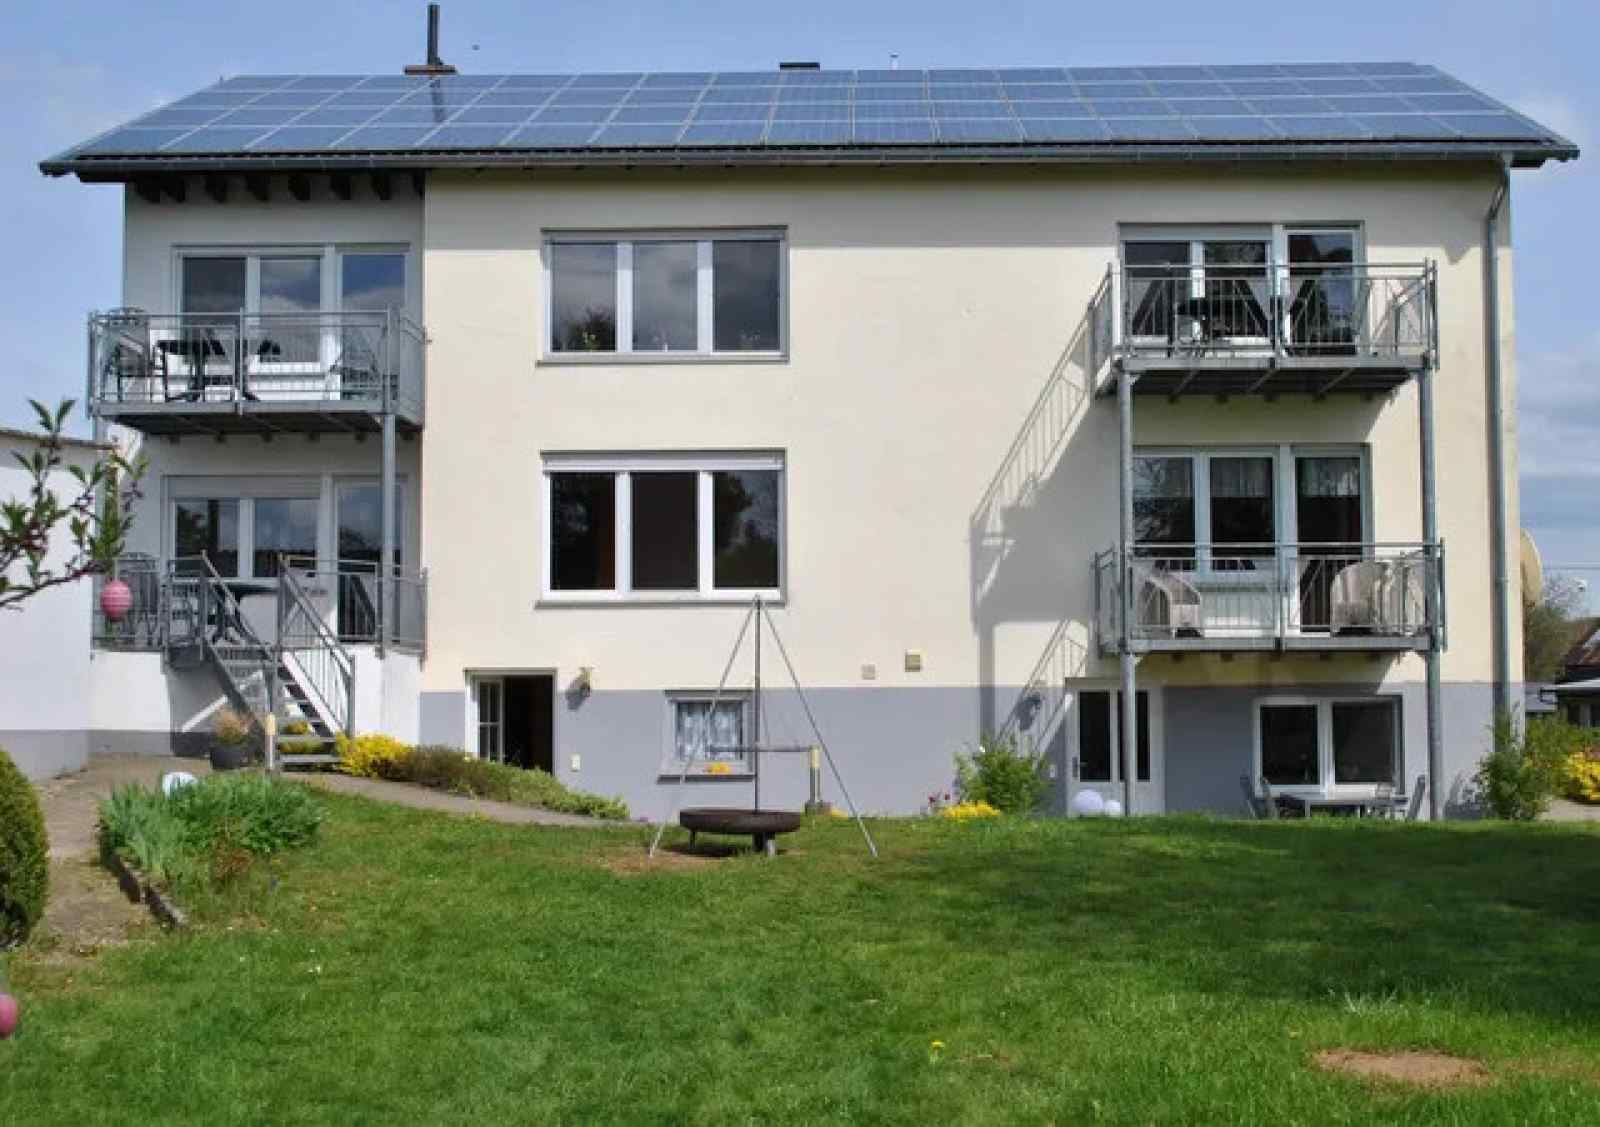 Mooi 6 persoons appartement in een idyllisch dorp in de Eifel - Duitsland - Europa - Oberscheidweiler